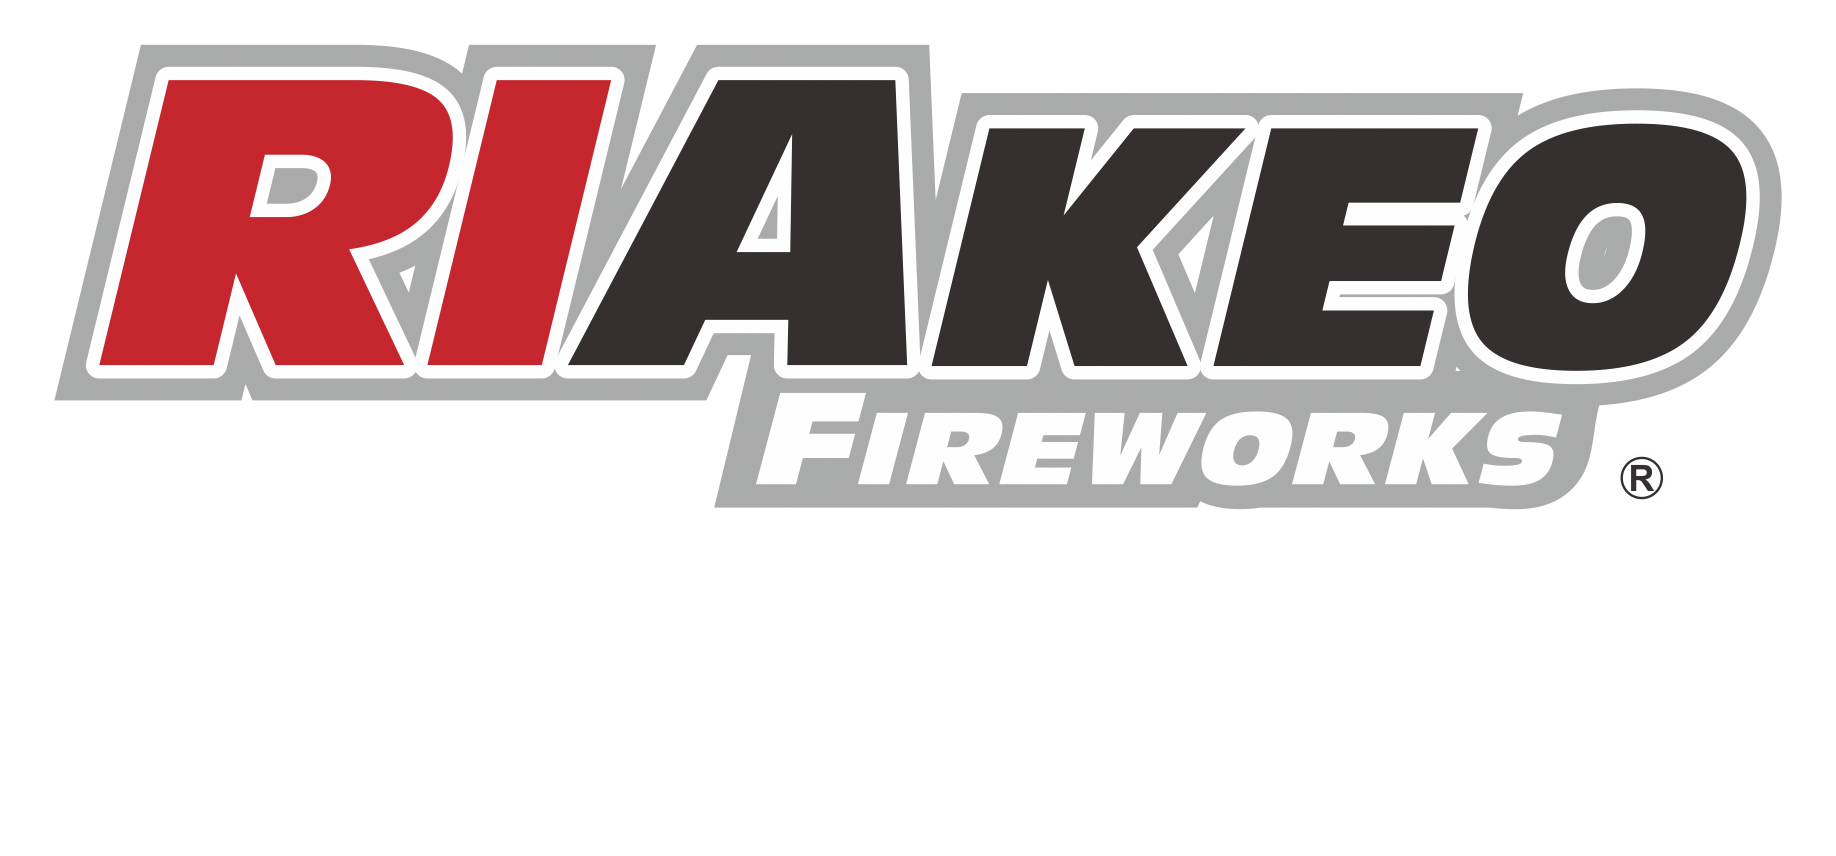 Riakeo vuurwerk logo